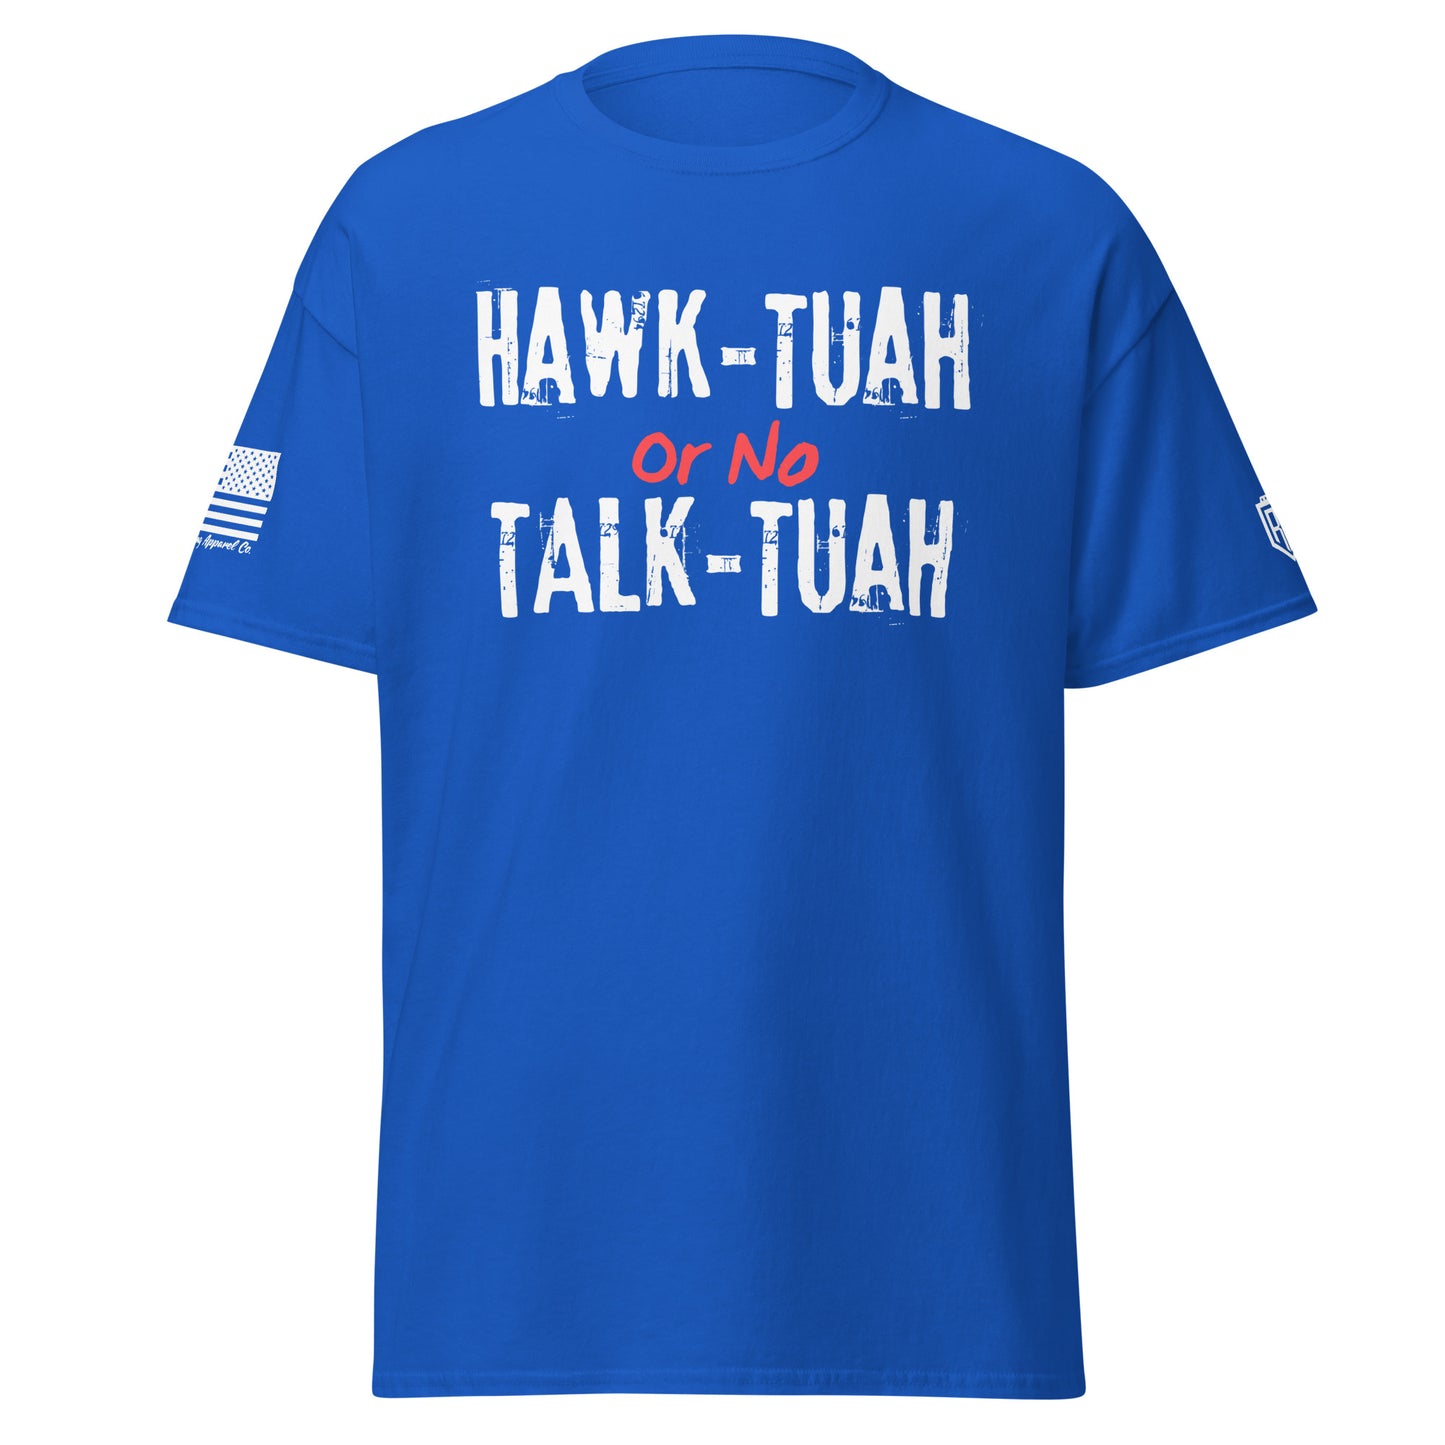 Hawk-Tuah or No Talk-Tuah T-Shirt